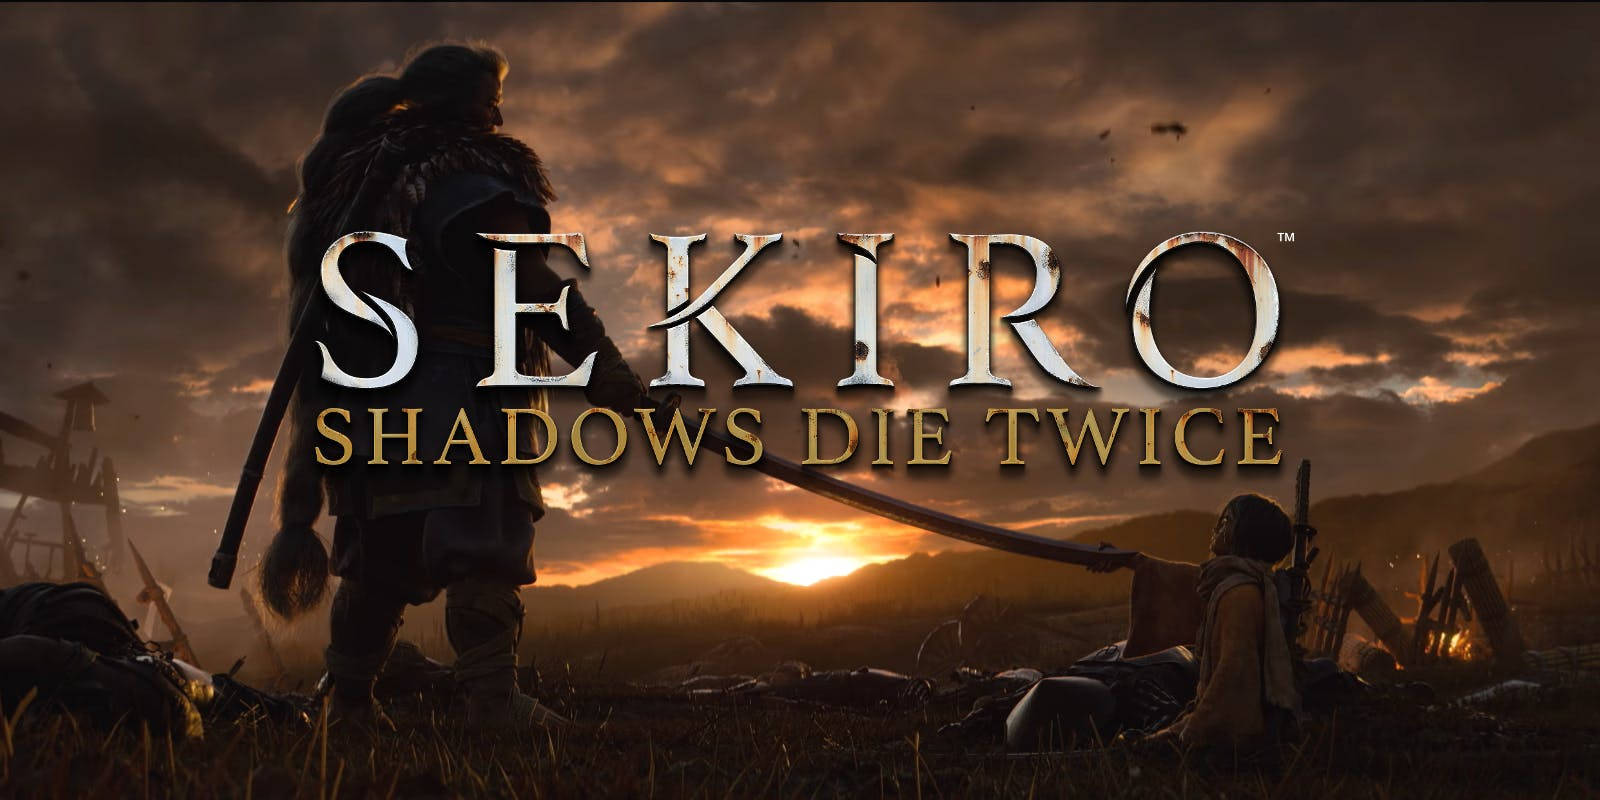 Free Sekiro Shadows Die Twice Wallpaper Downloads, [100+] Sekiro Shadows  Die Twice Wallpapers for FREE 